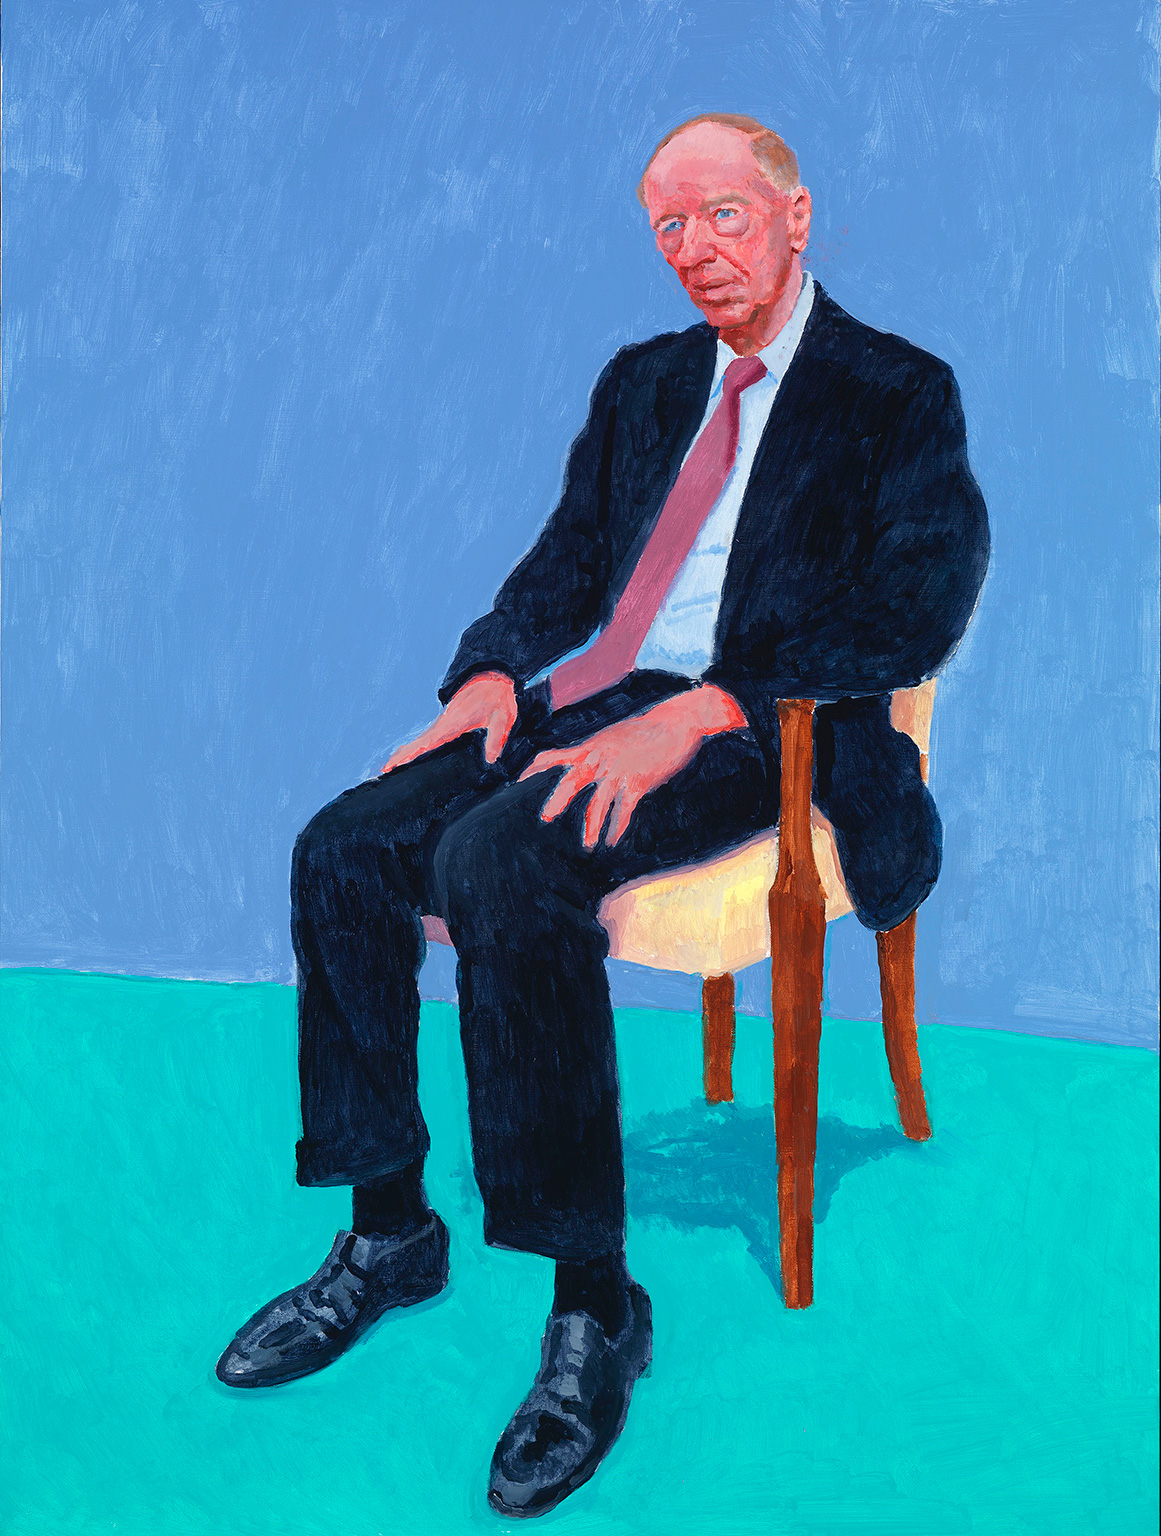 David Hockney, Lord Jacob Rothschild, 5-6 February, 2014 © David Hockney. Photo credit: Richard Schmidt